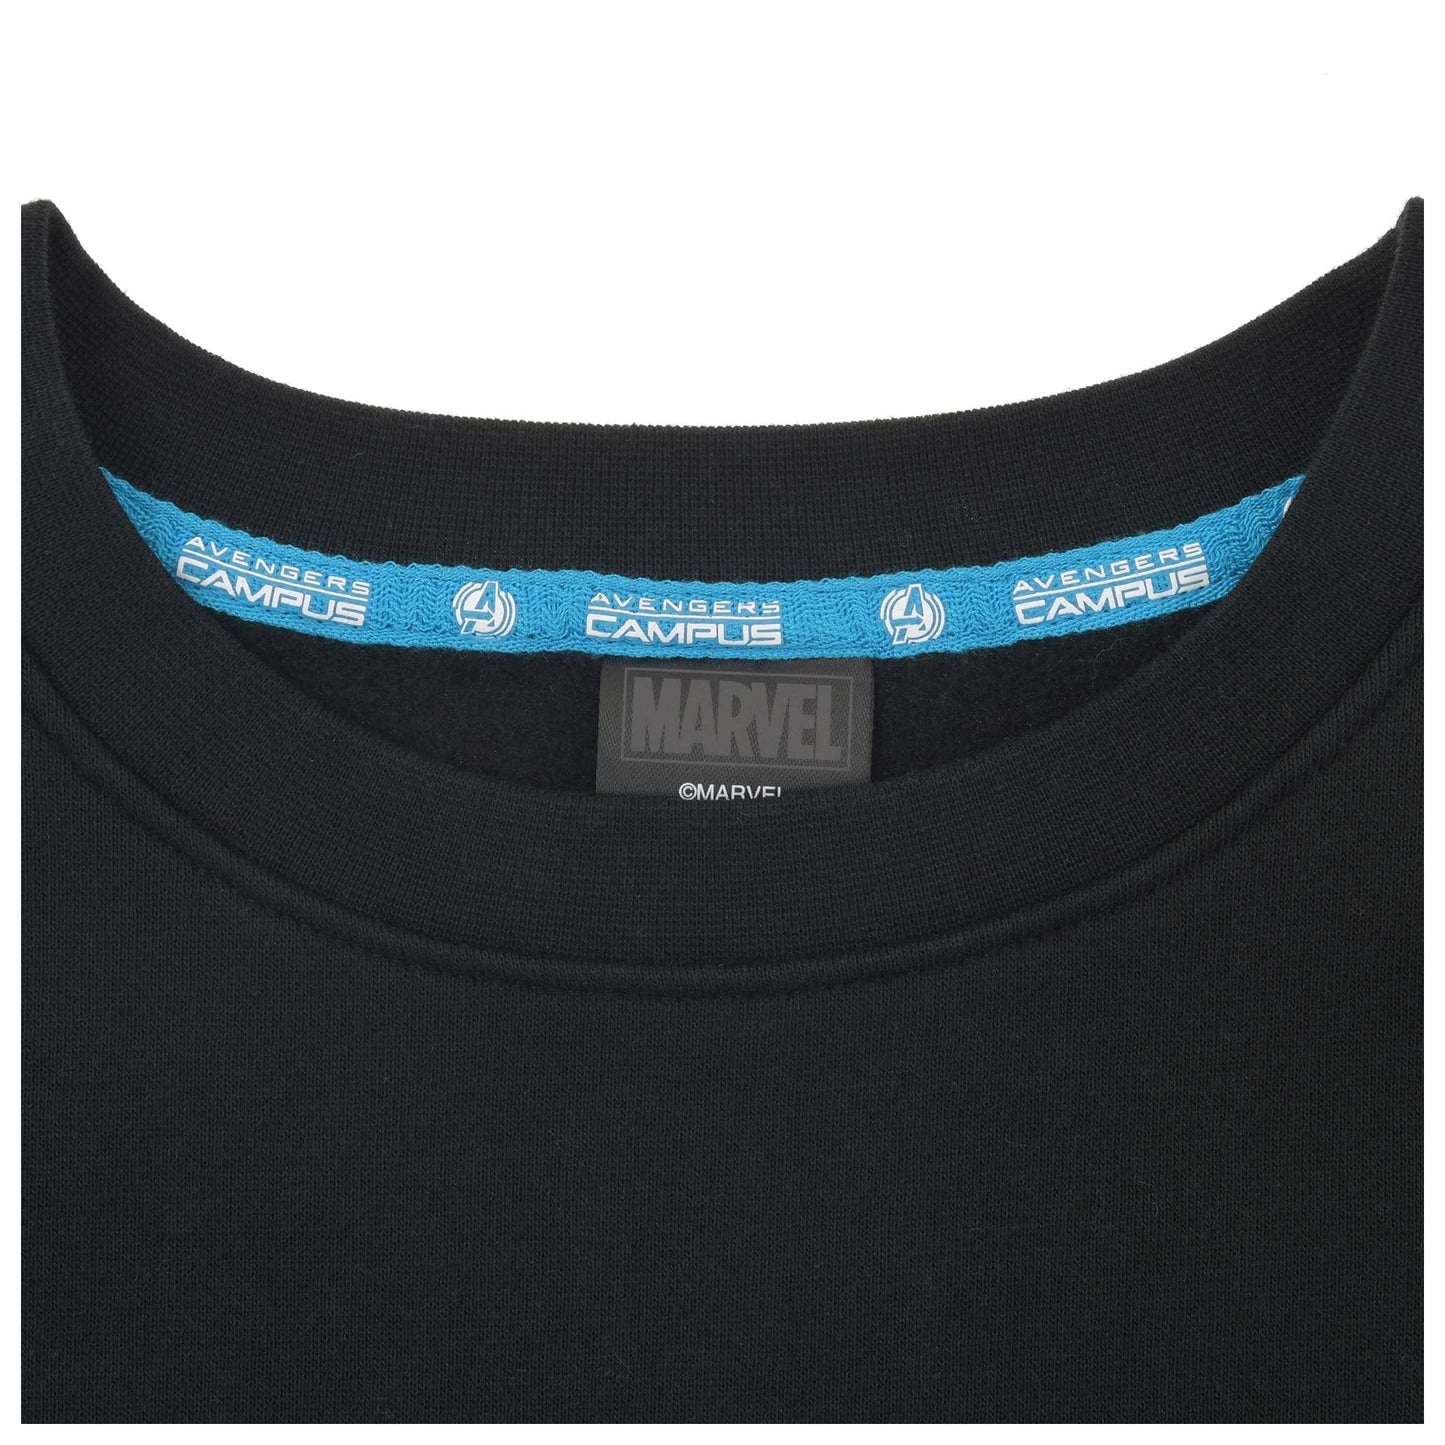 Disney Store - Marvel Avengers Campus - Sweatshirt